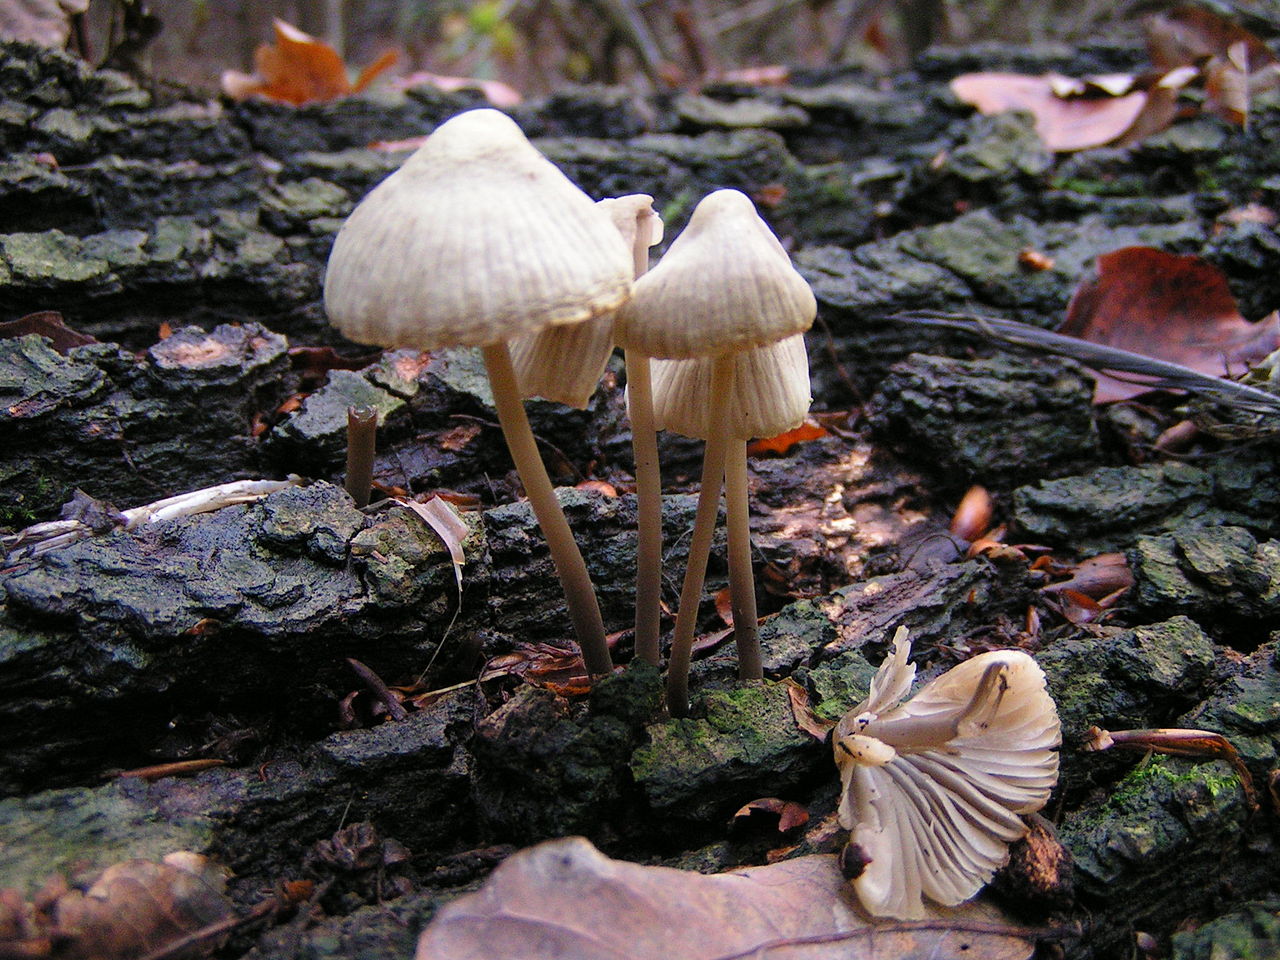 Mycena funghi